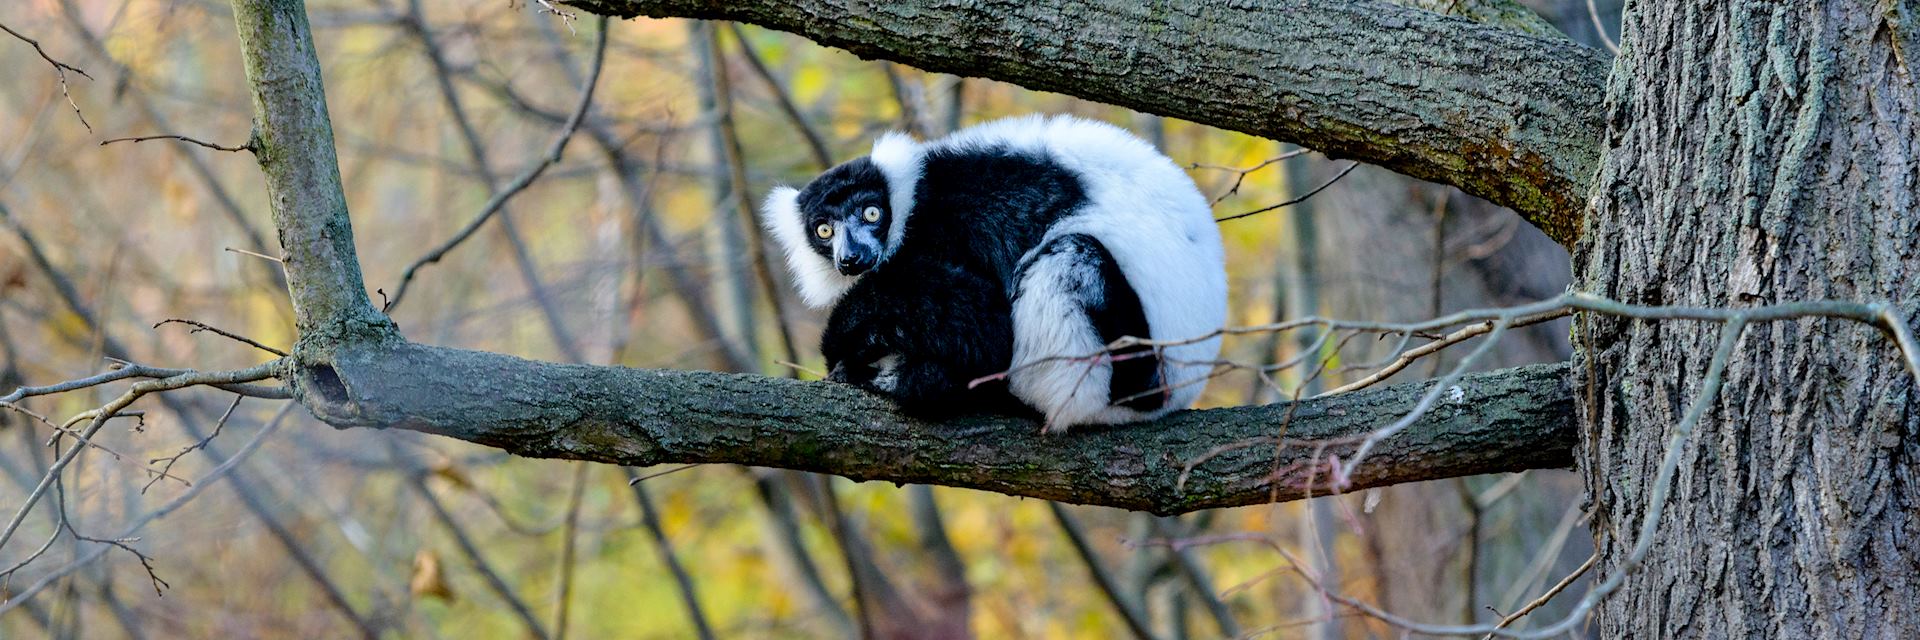 Guide to wildlife of Madagascar